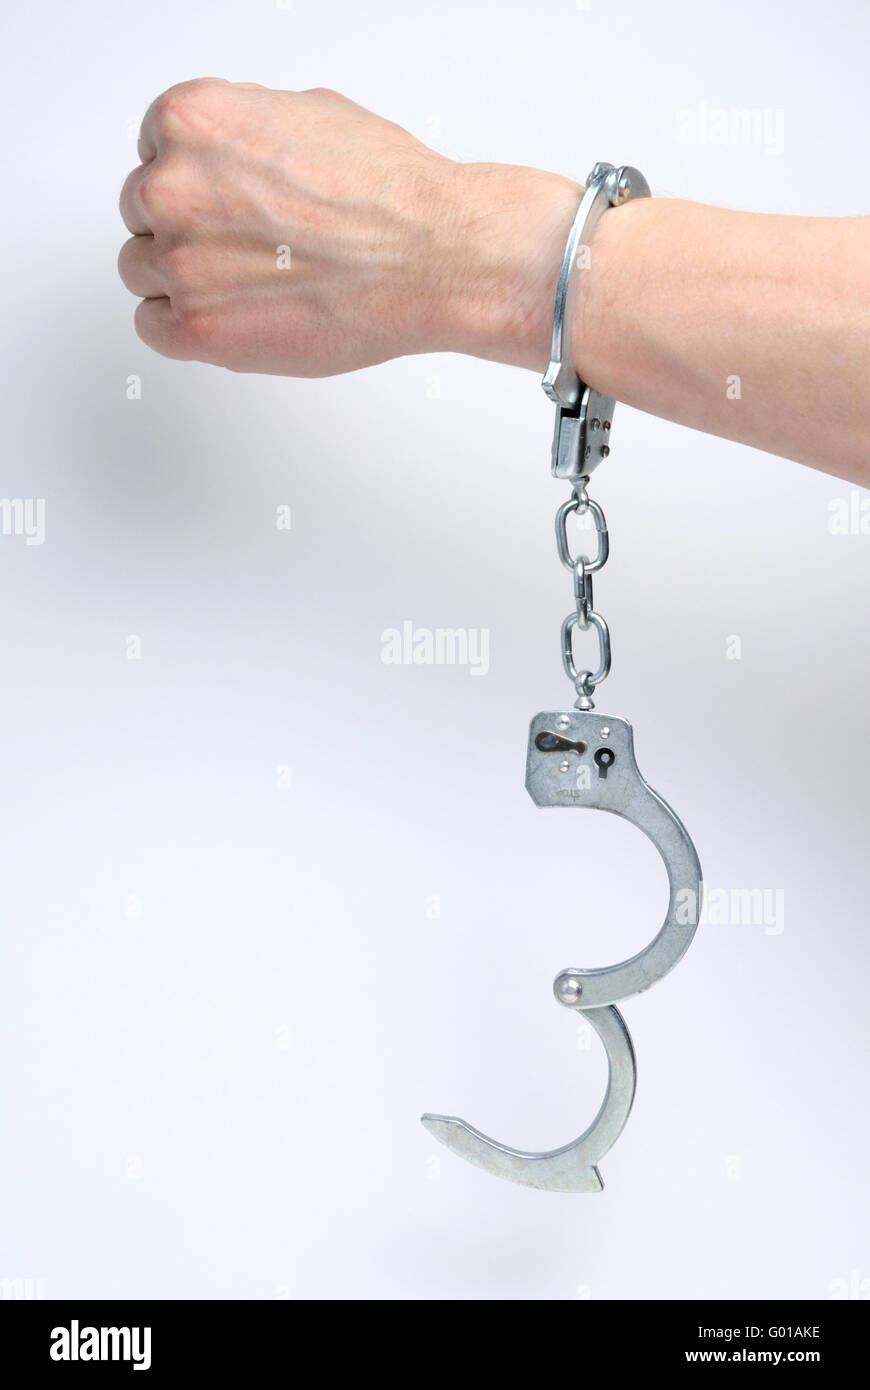 Handcuffs on man's wrist Stock Photo